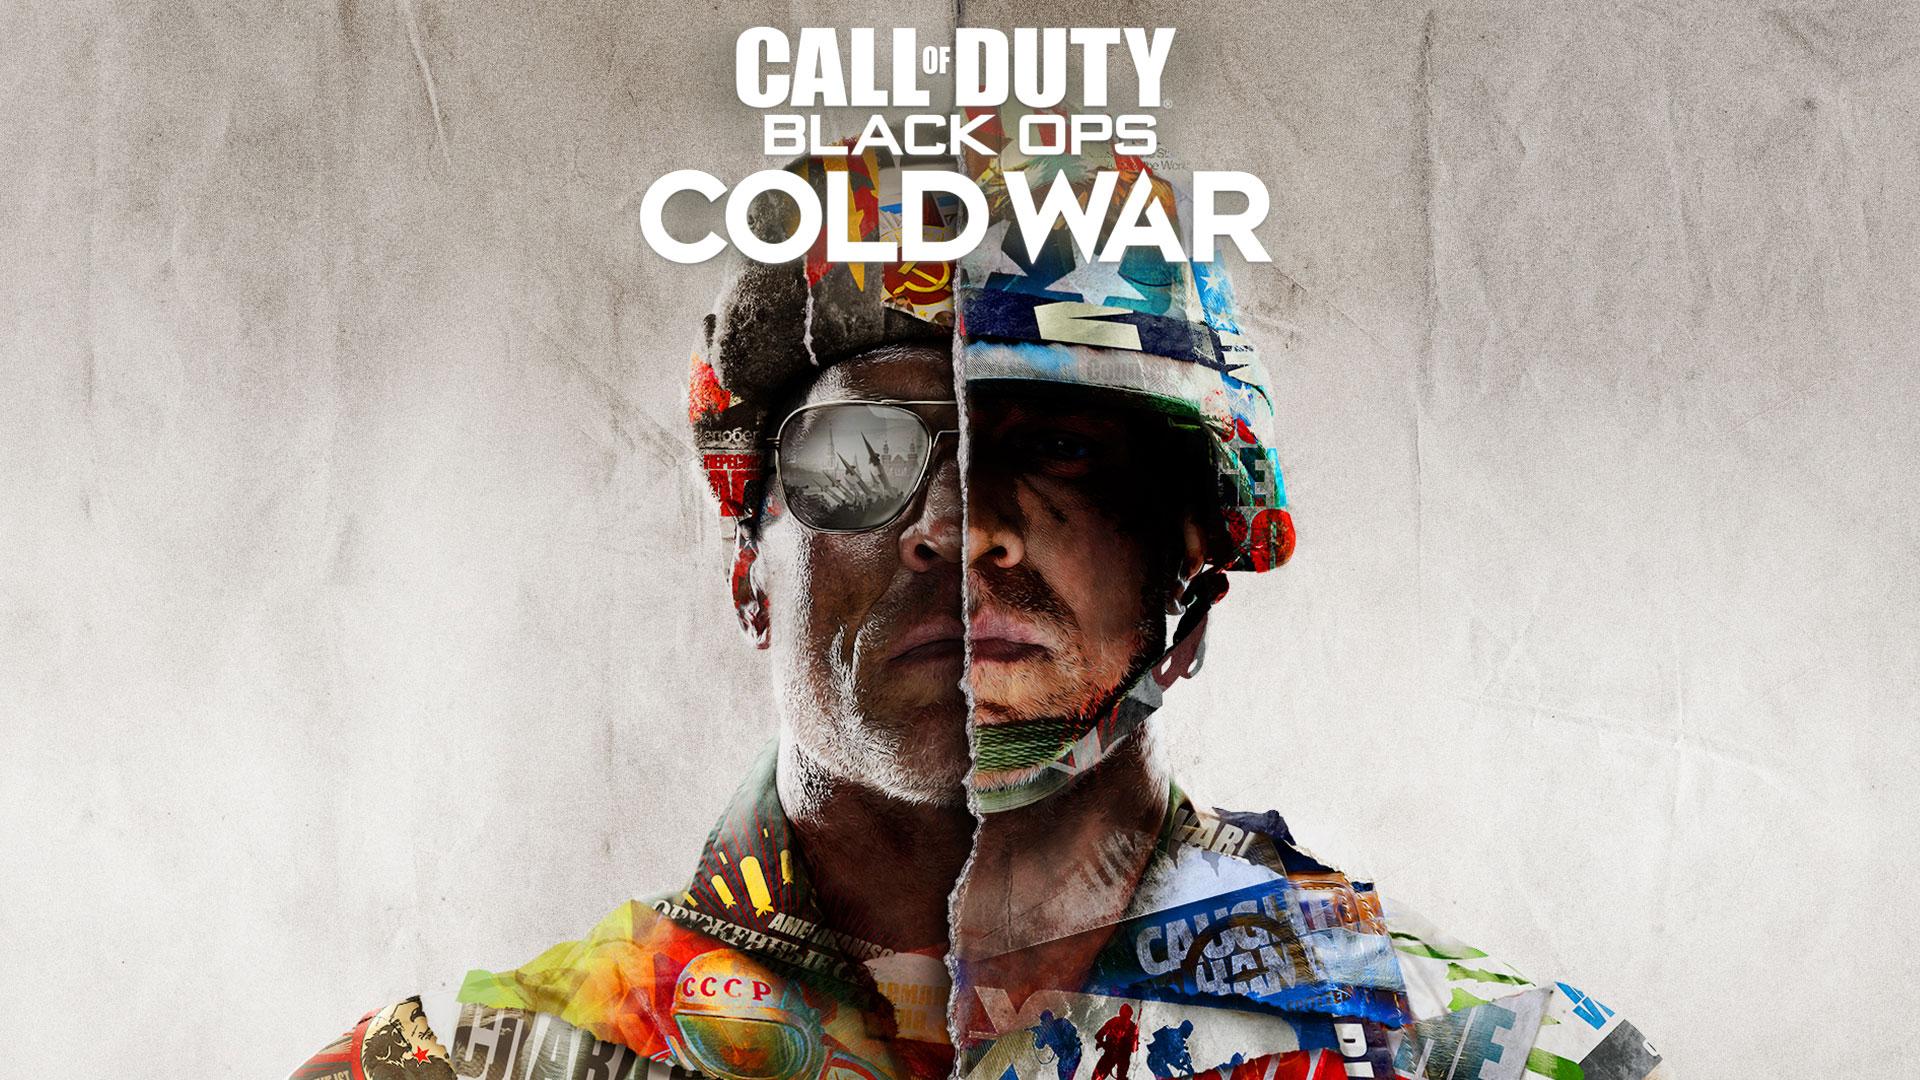 Call of Duty Black Ops Cold War ضمن قائمة أفضل ألعاب الفيديو لعام 2020